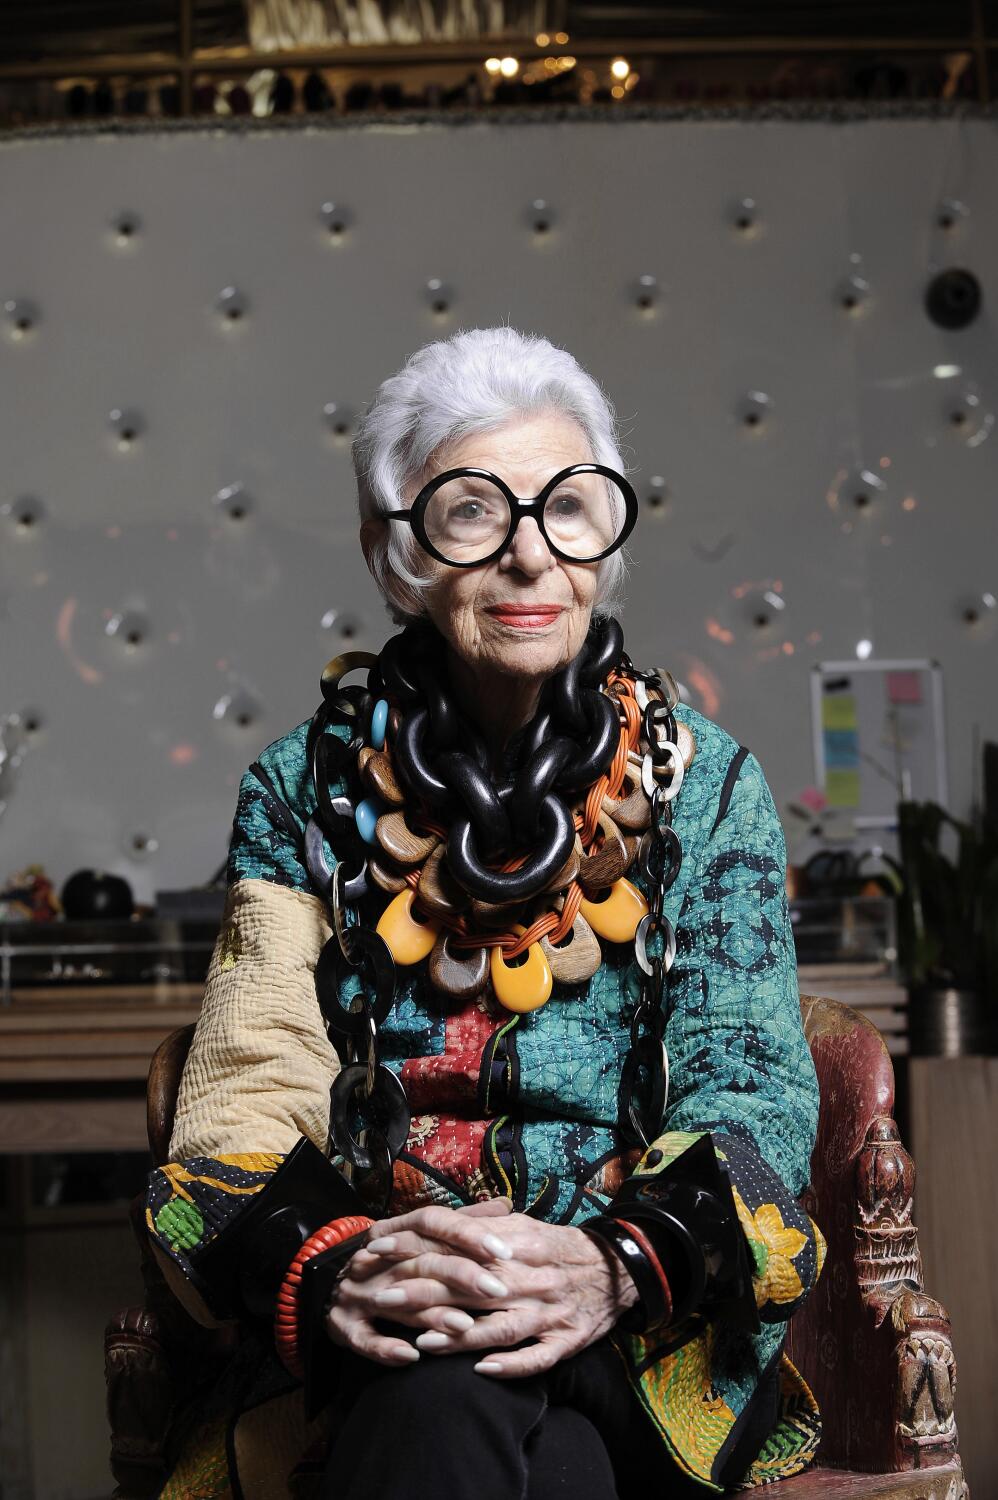 Iris Apfel, beloved style icon whose fame peaked in her 90s, dies at 102